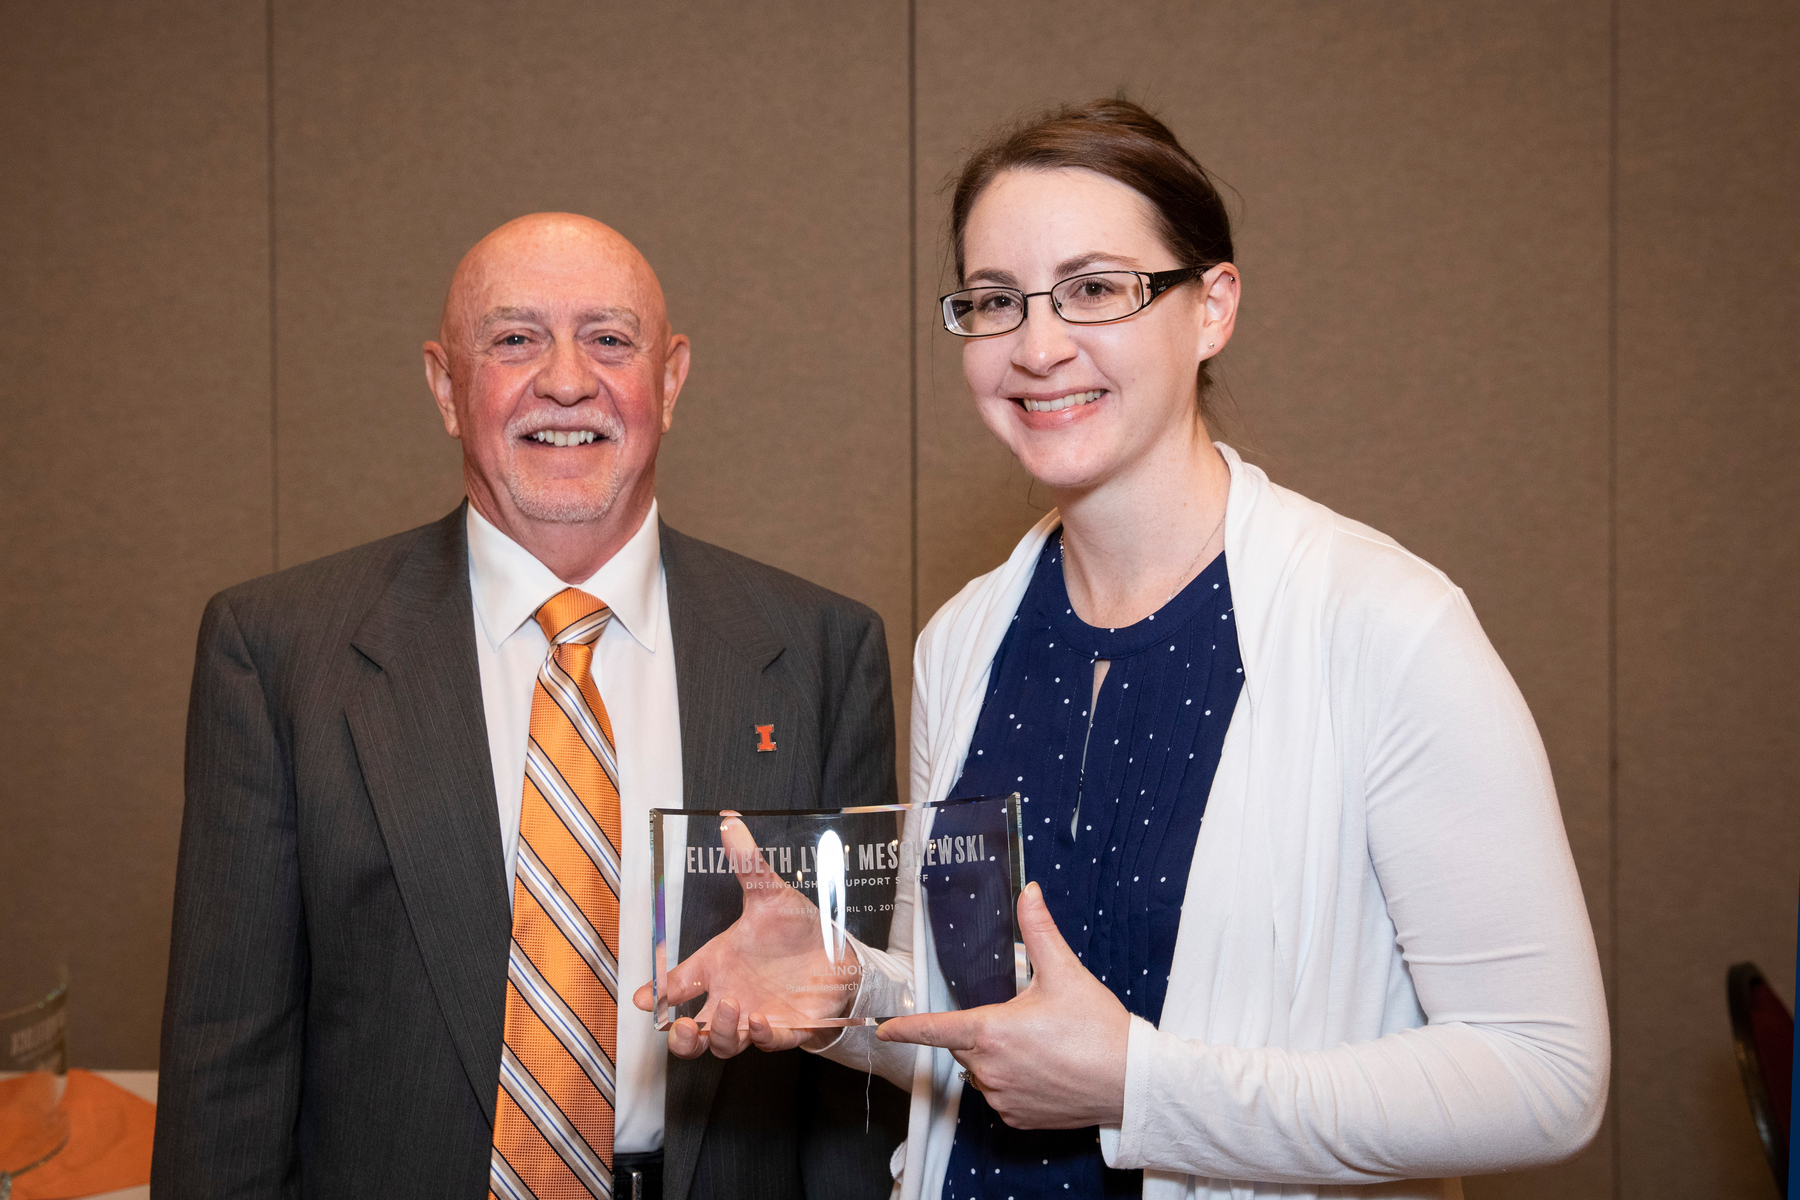 PRI Executive Director Mark Ryan presented Elizabeth Meschewski with the Oustanding Support Staff Award.